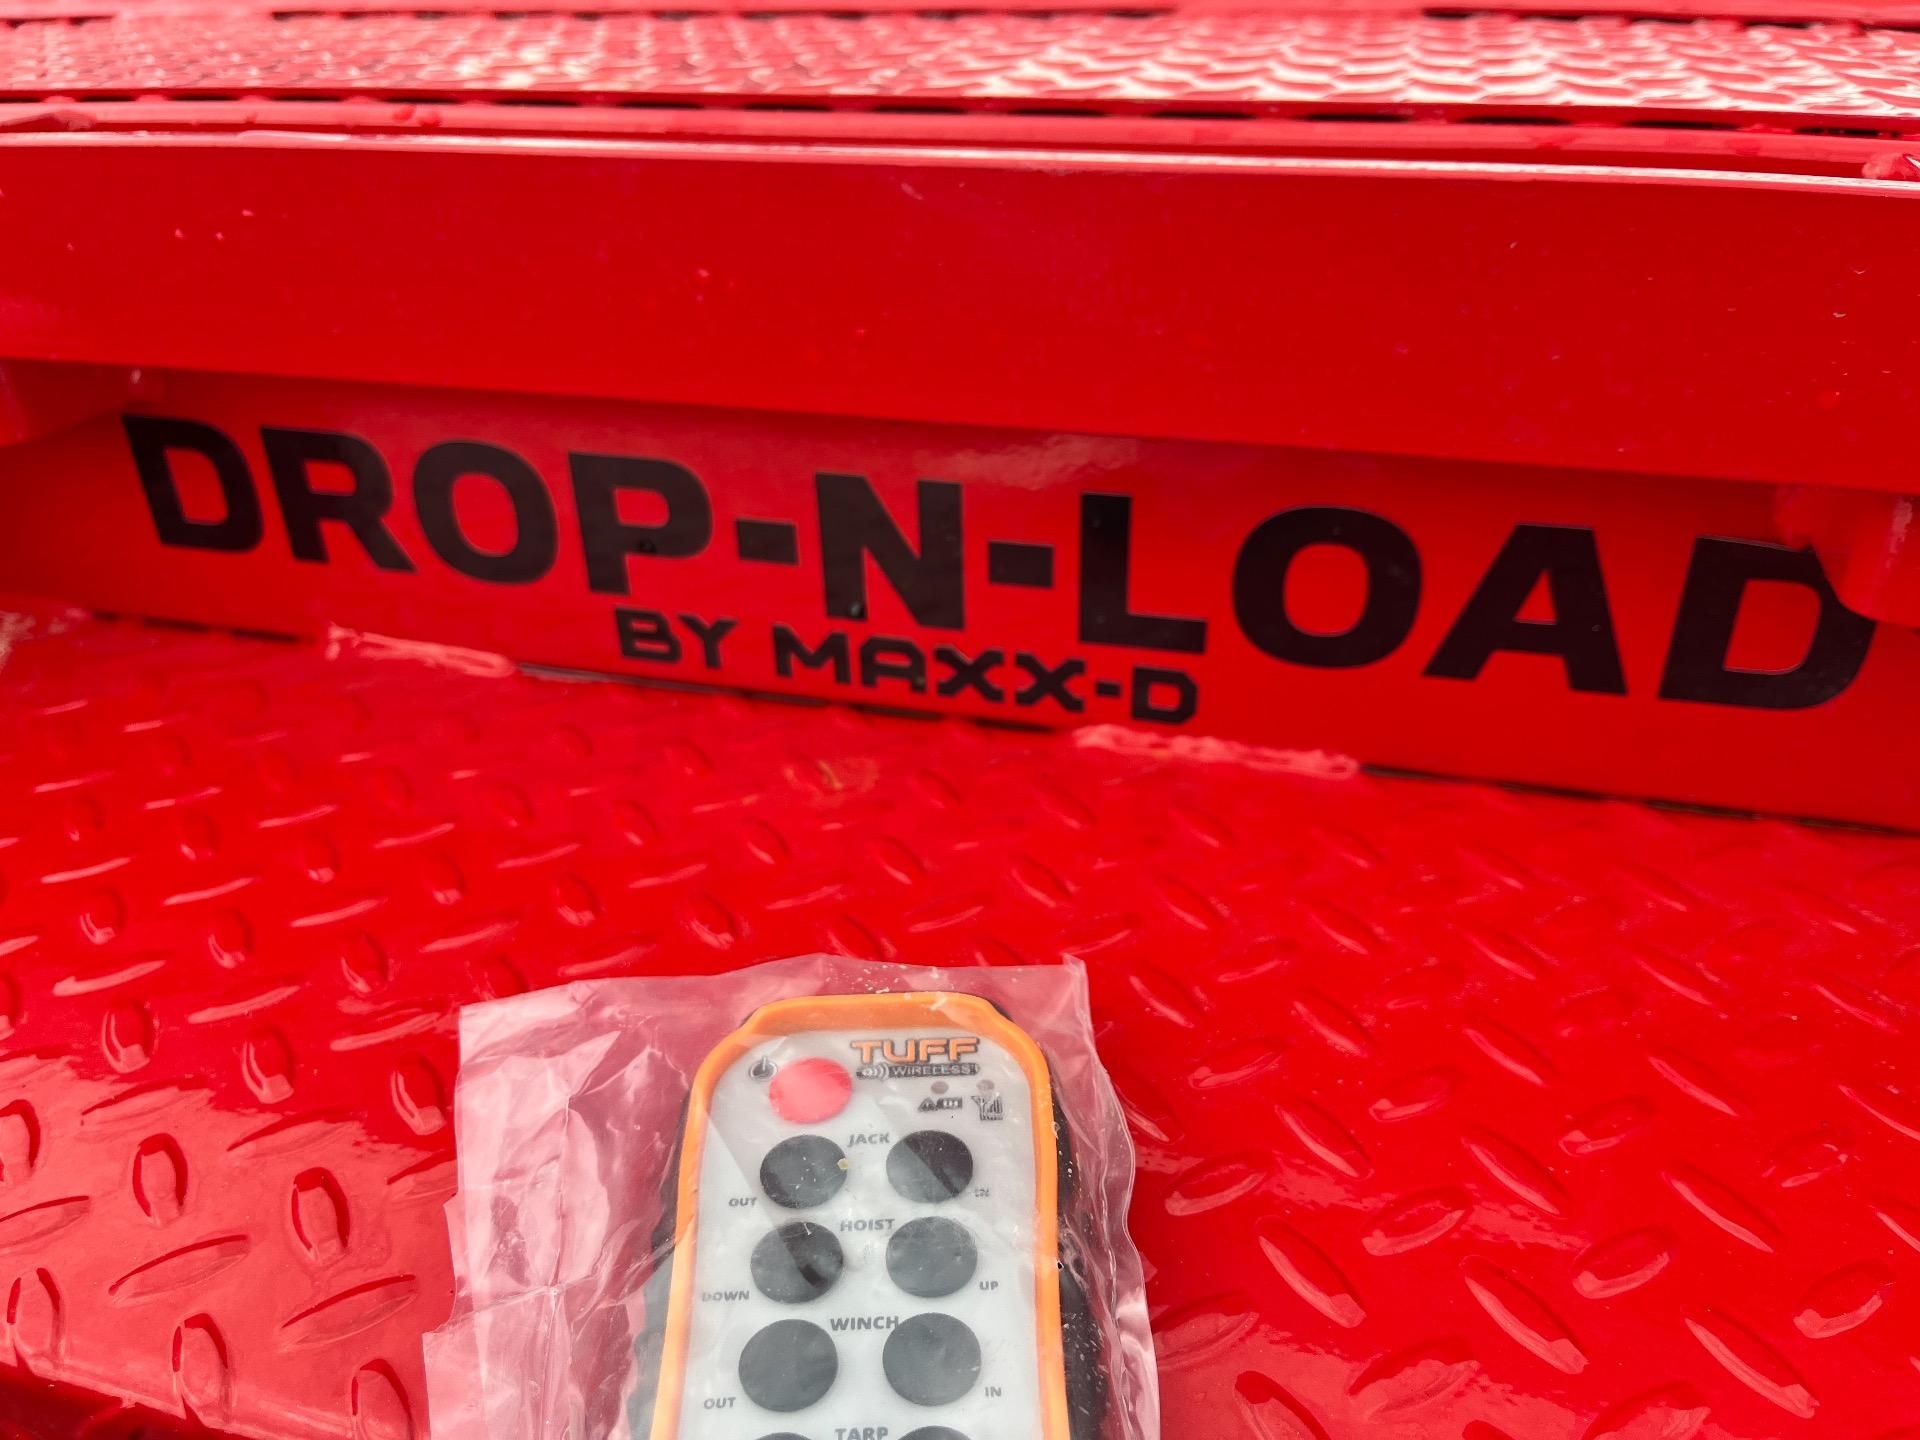 2024 MaxxD Drop-N-Load 6